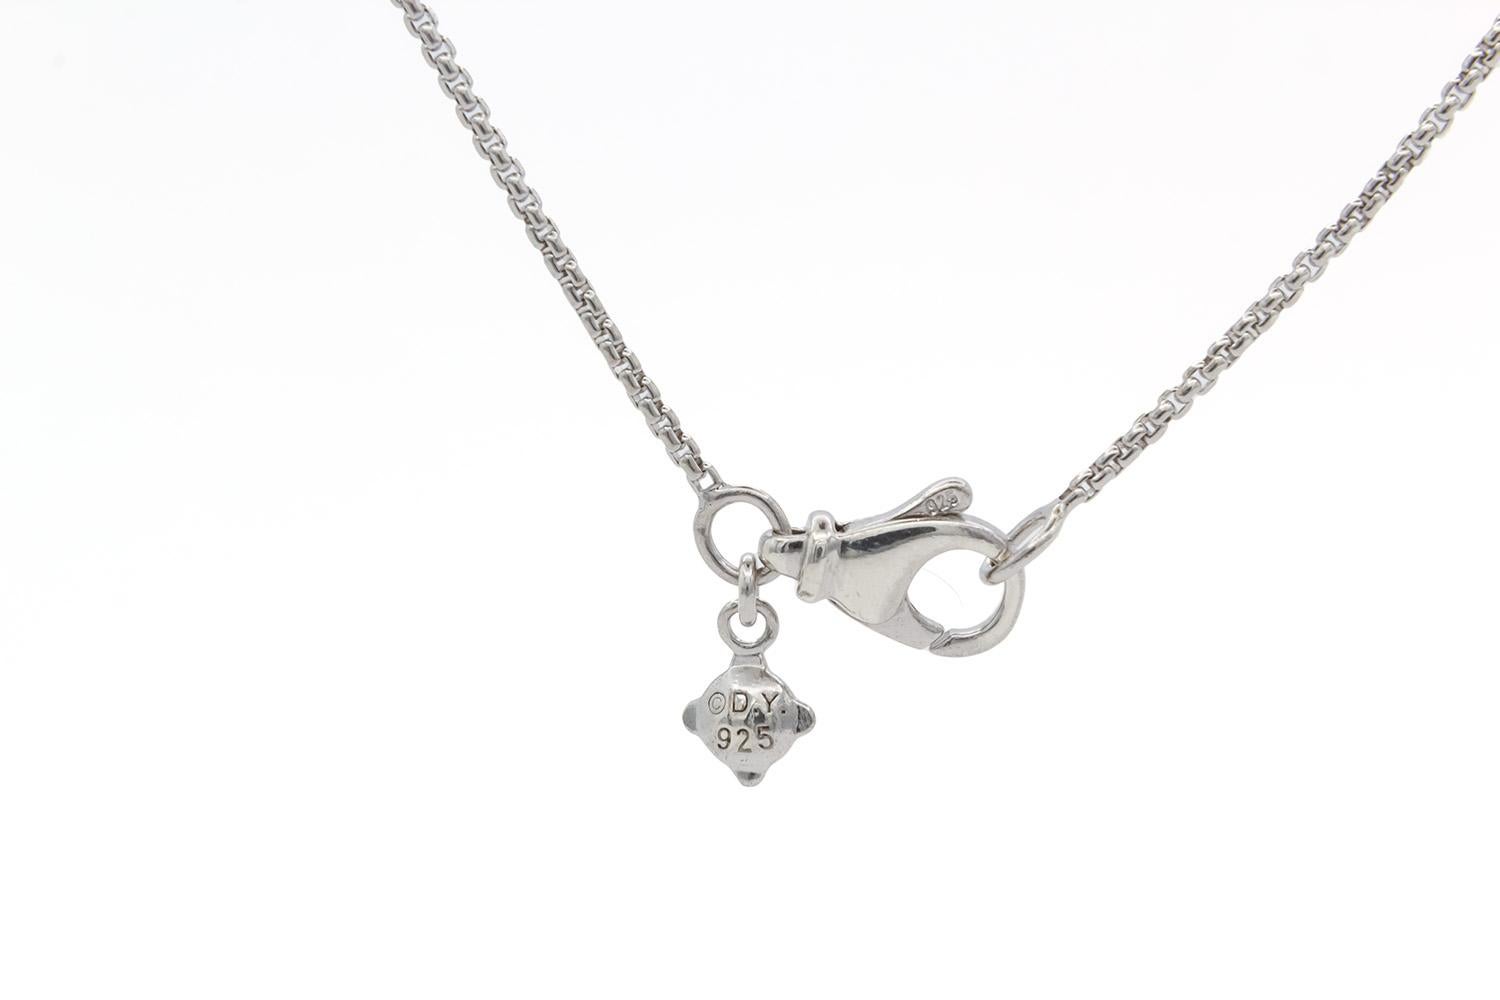 Women's David Yurman Sterling Silver & Diamond Pave Infinity Cable Necklace Pendant